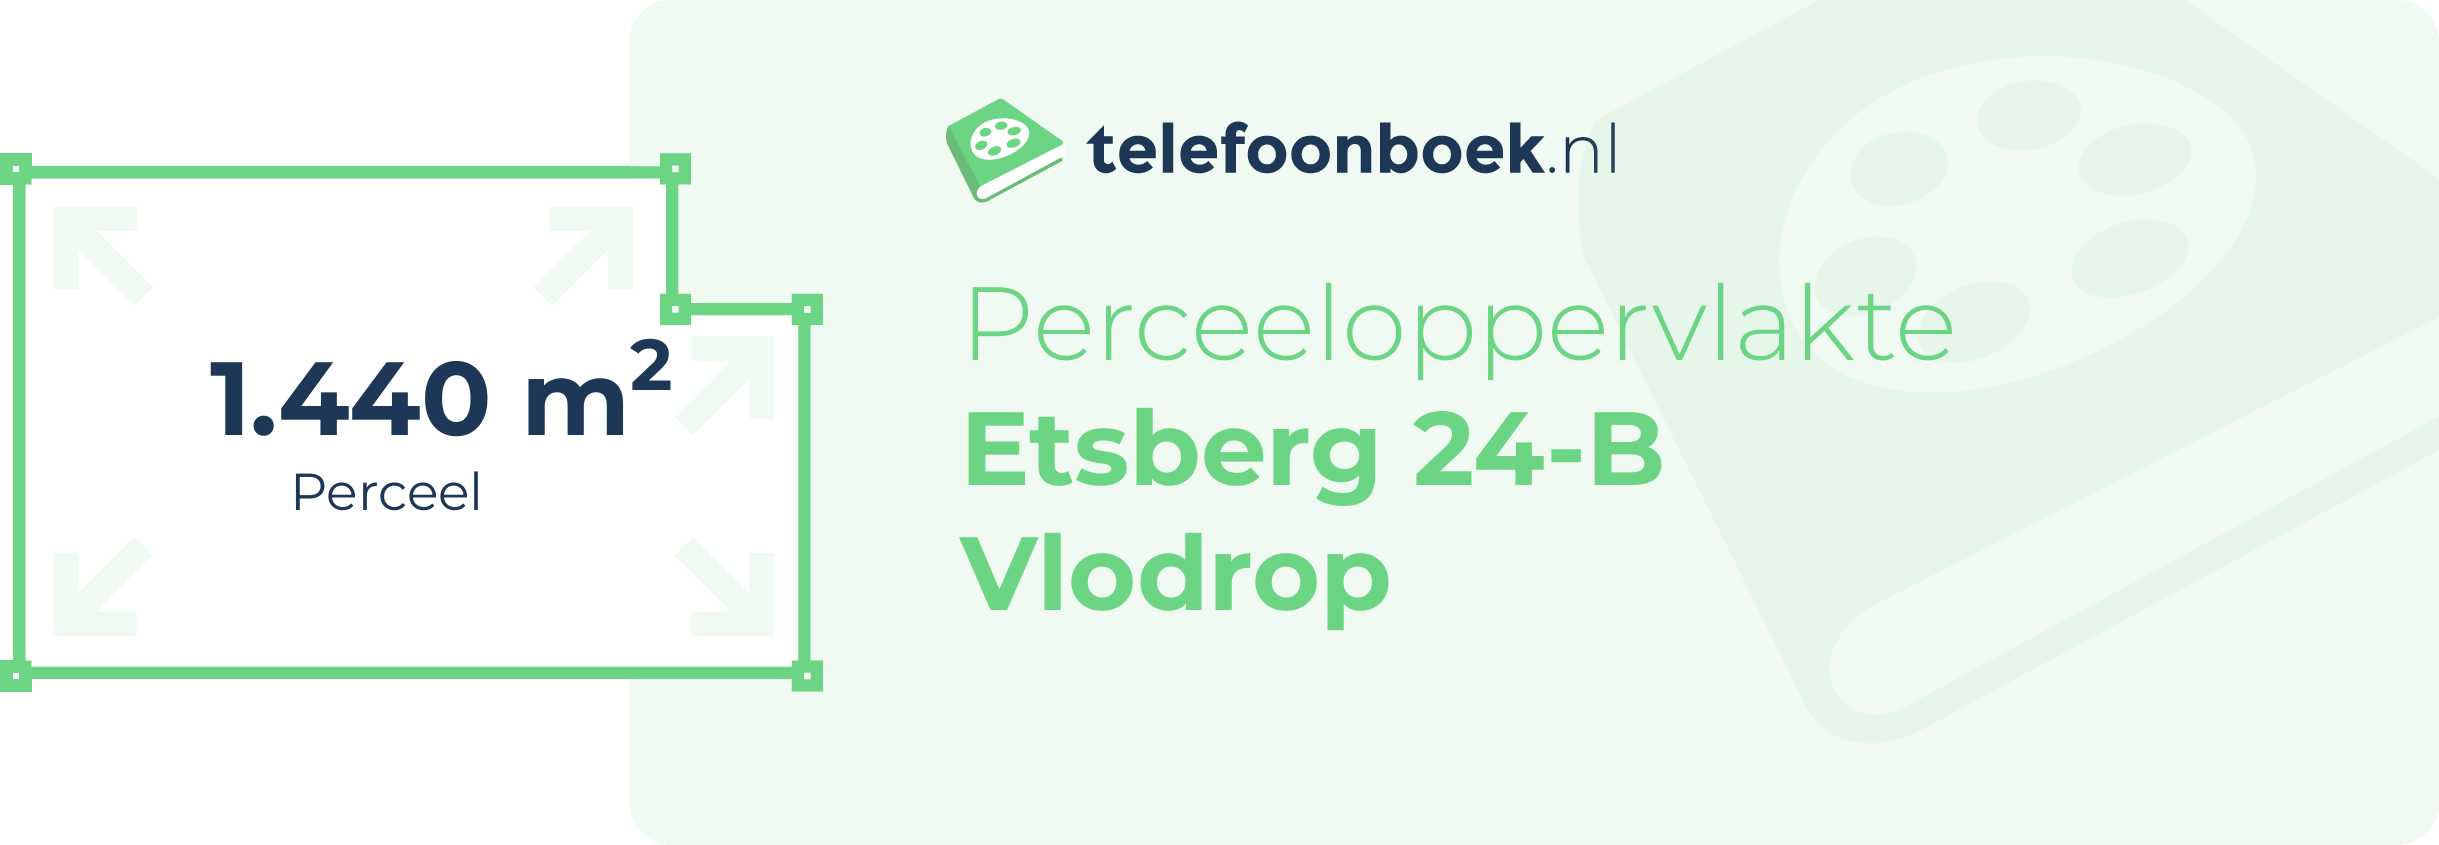 Perceeloppervlakte Etsberg 24-B Vlodrop